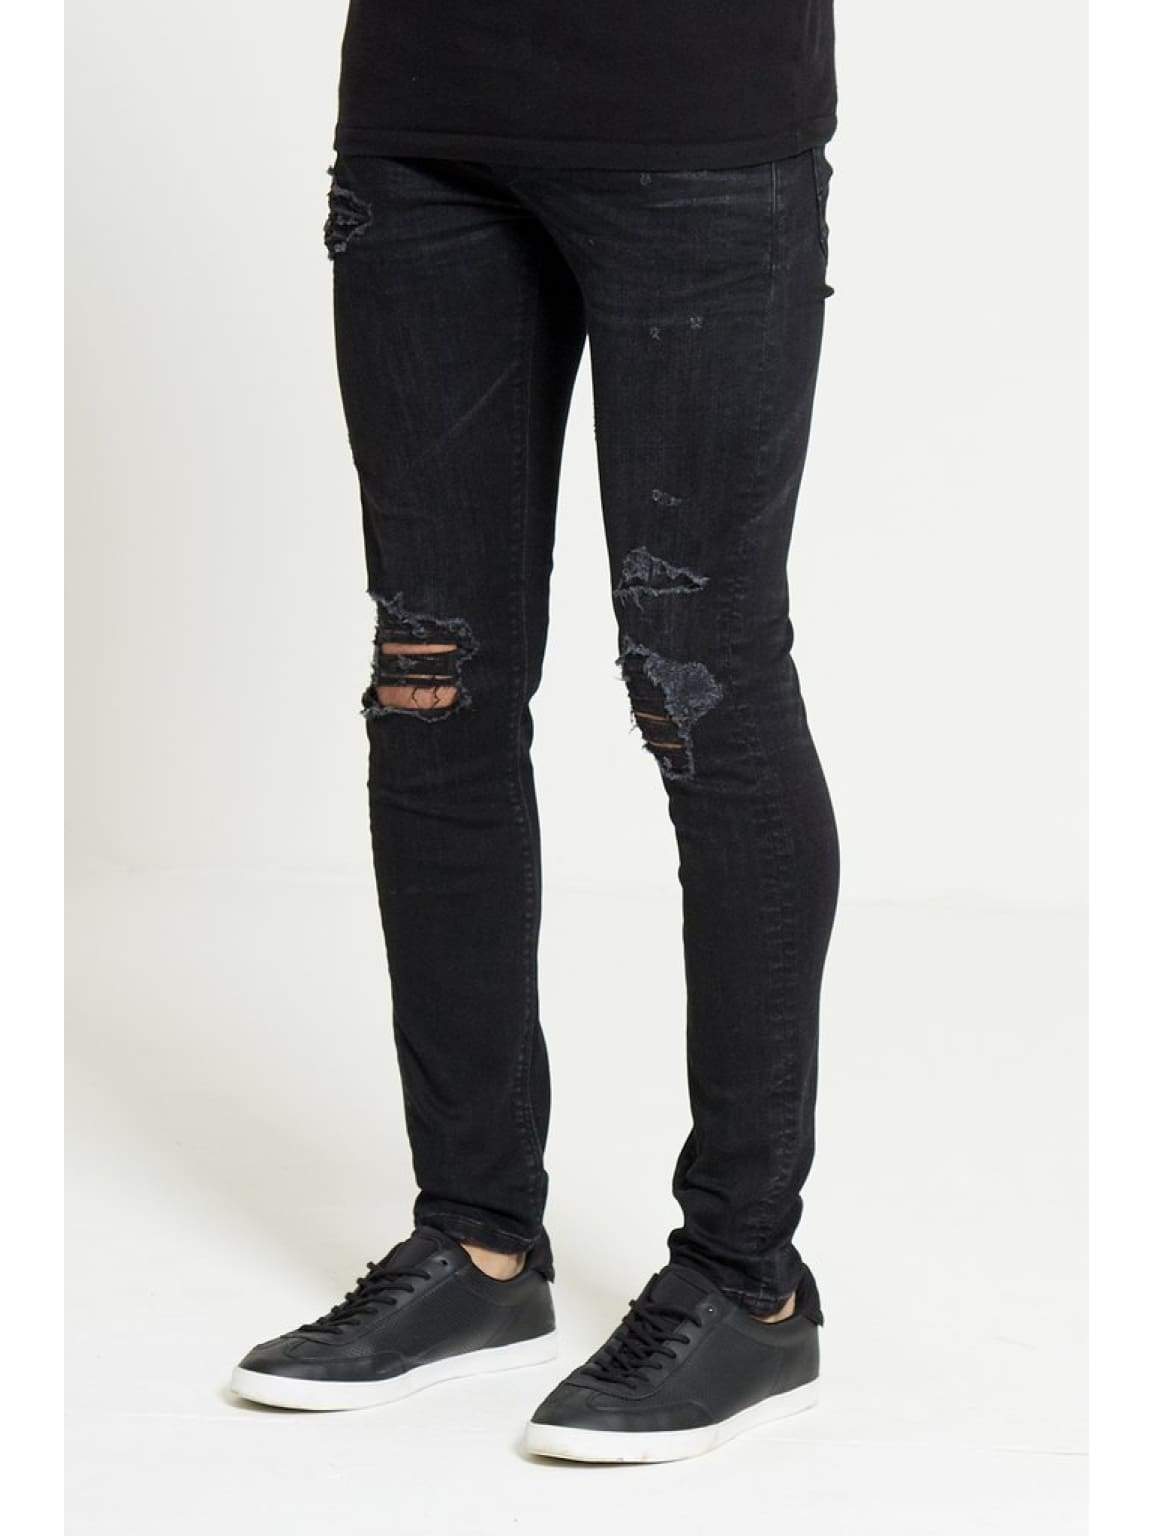 HAVOC Super Skinny Jeans In True Black - HIRE5 Menswear